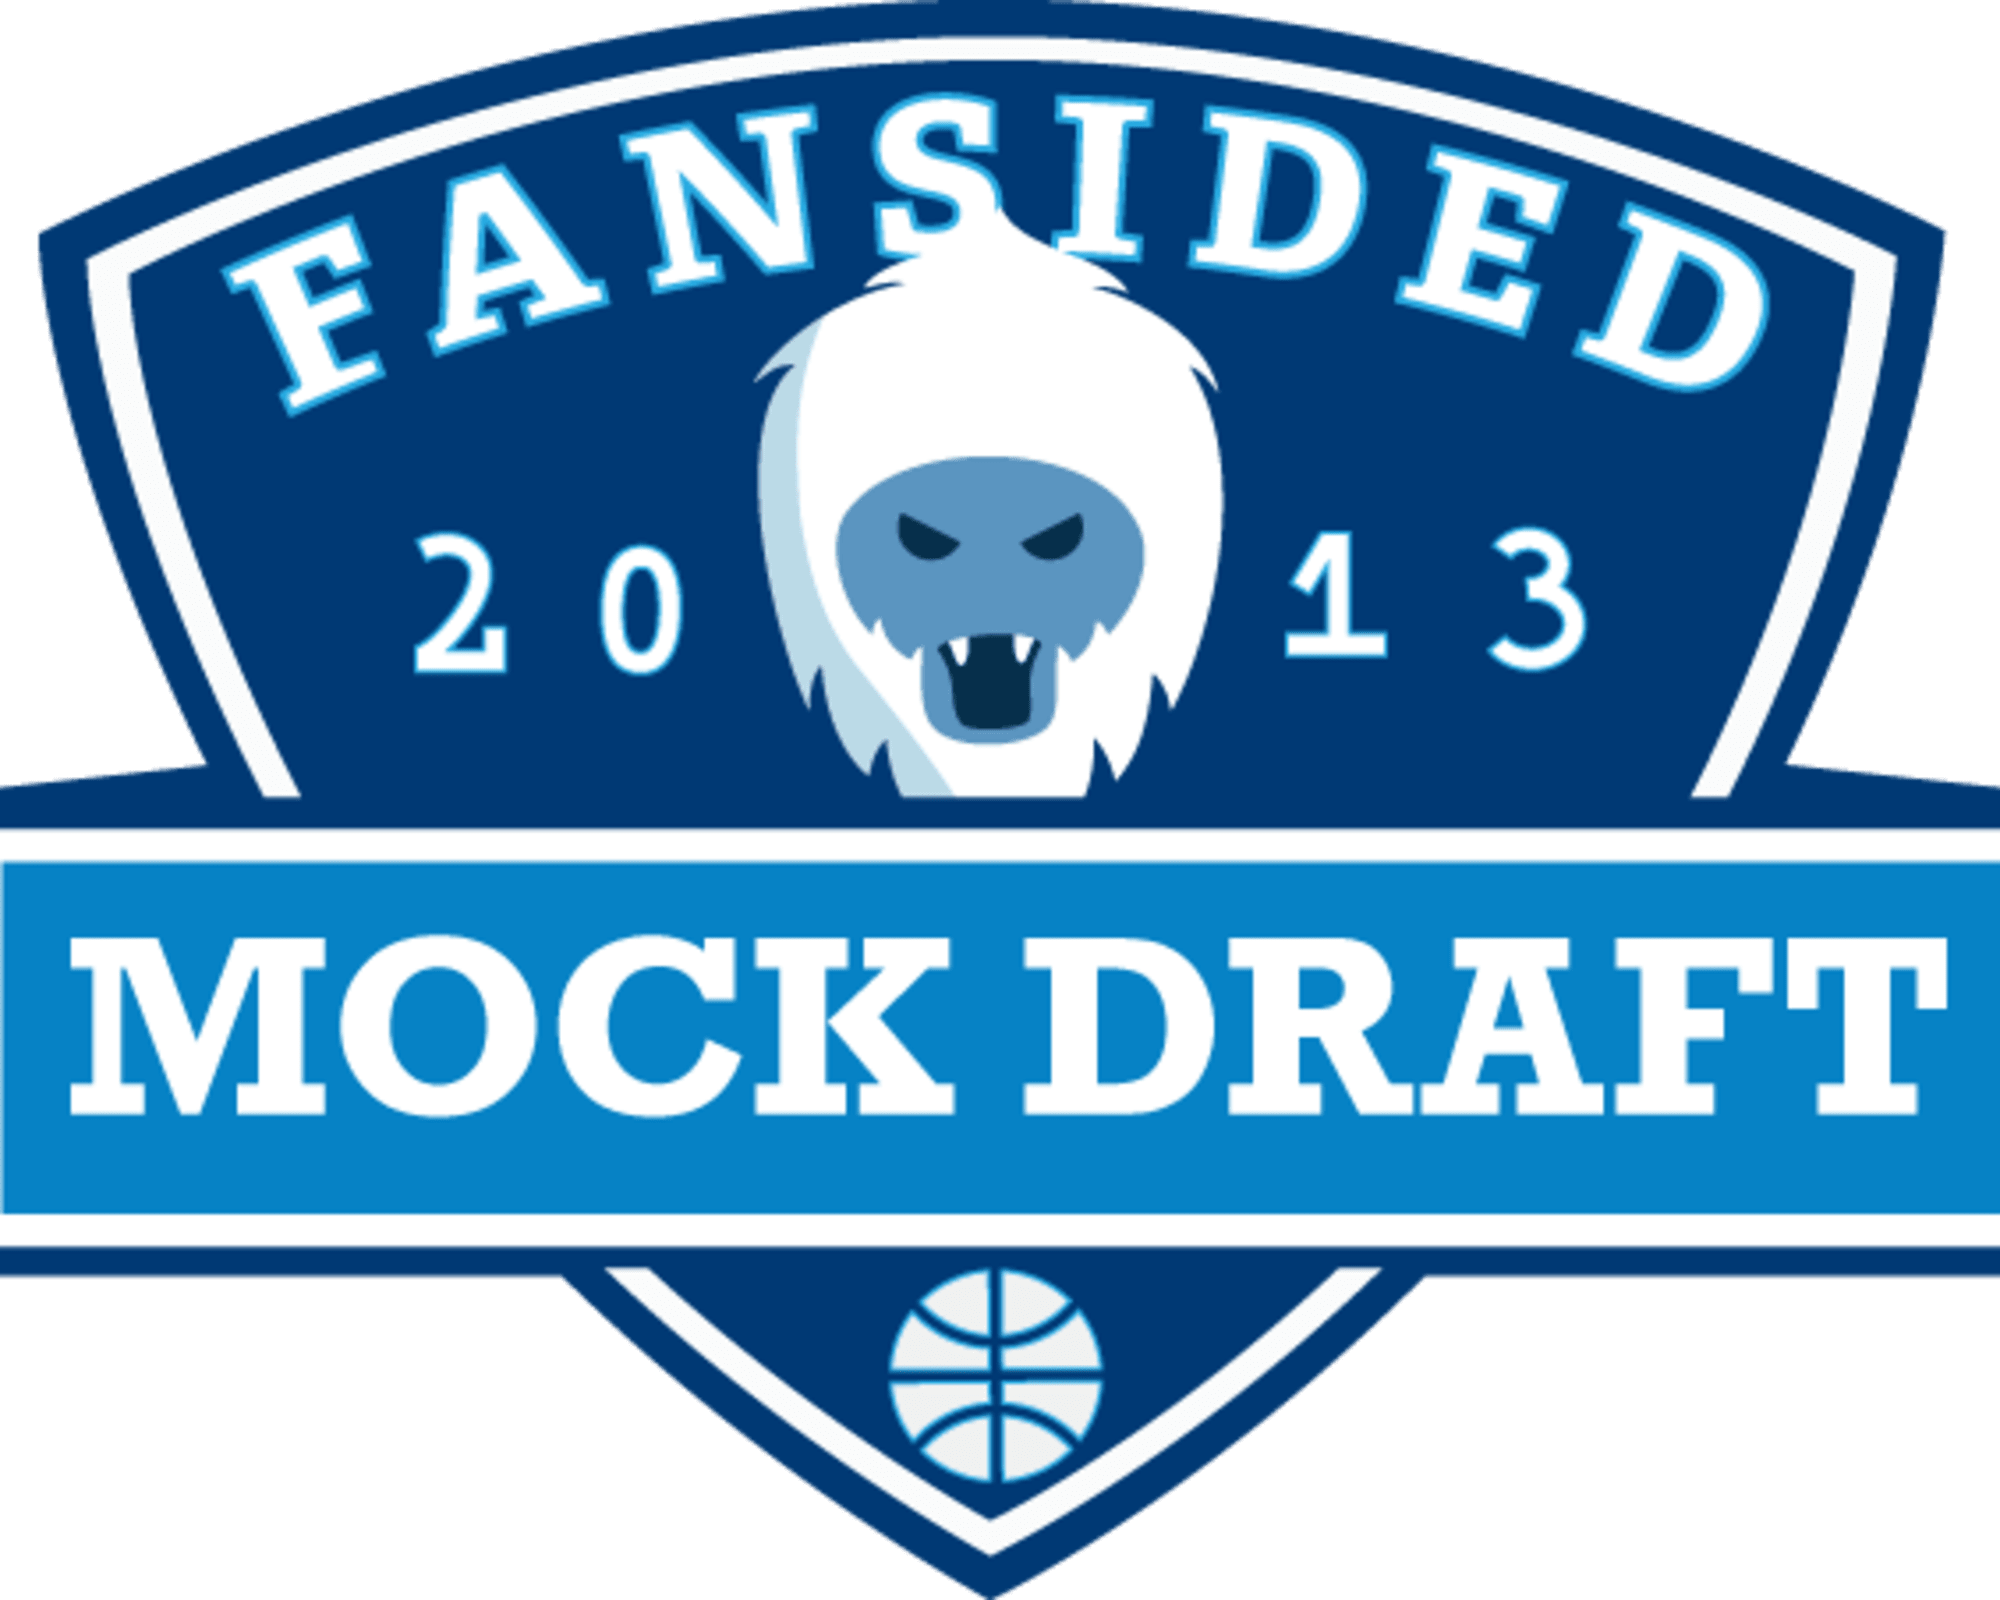 NBA Mock Draft 2013 Full FirstRound Draft Order and Analysis